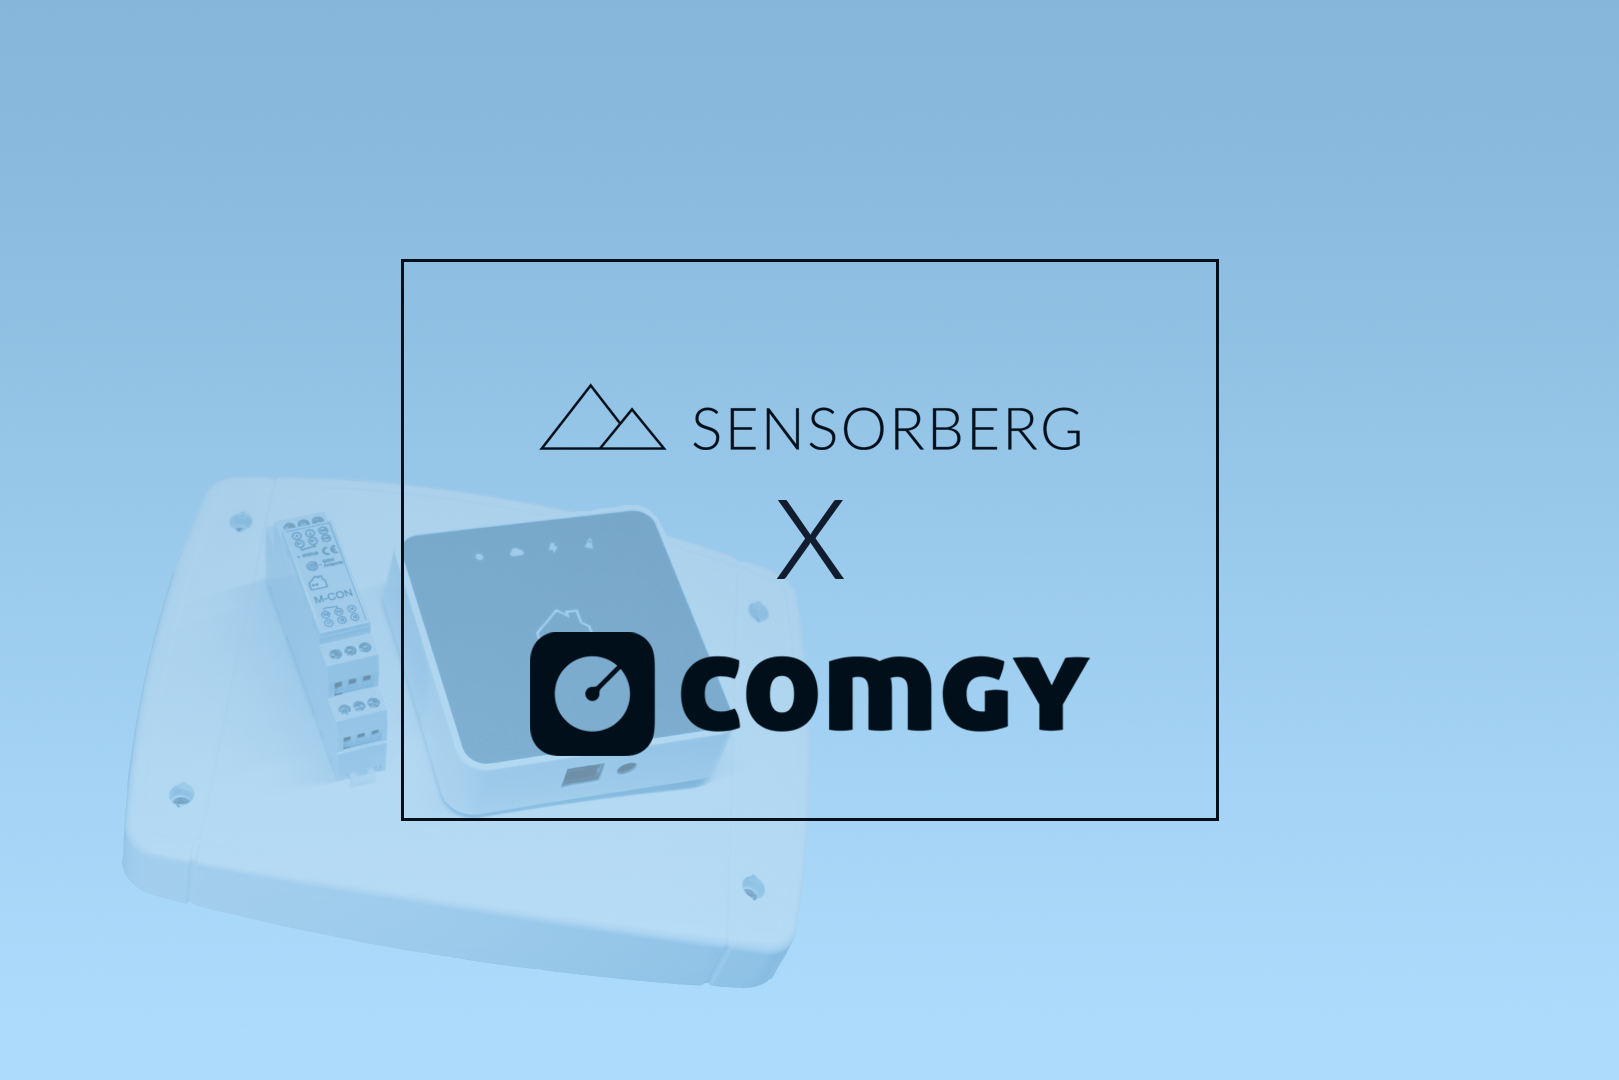 Sensorberg expands platform solution with digital metering service provider Comgy